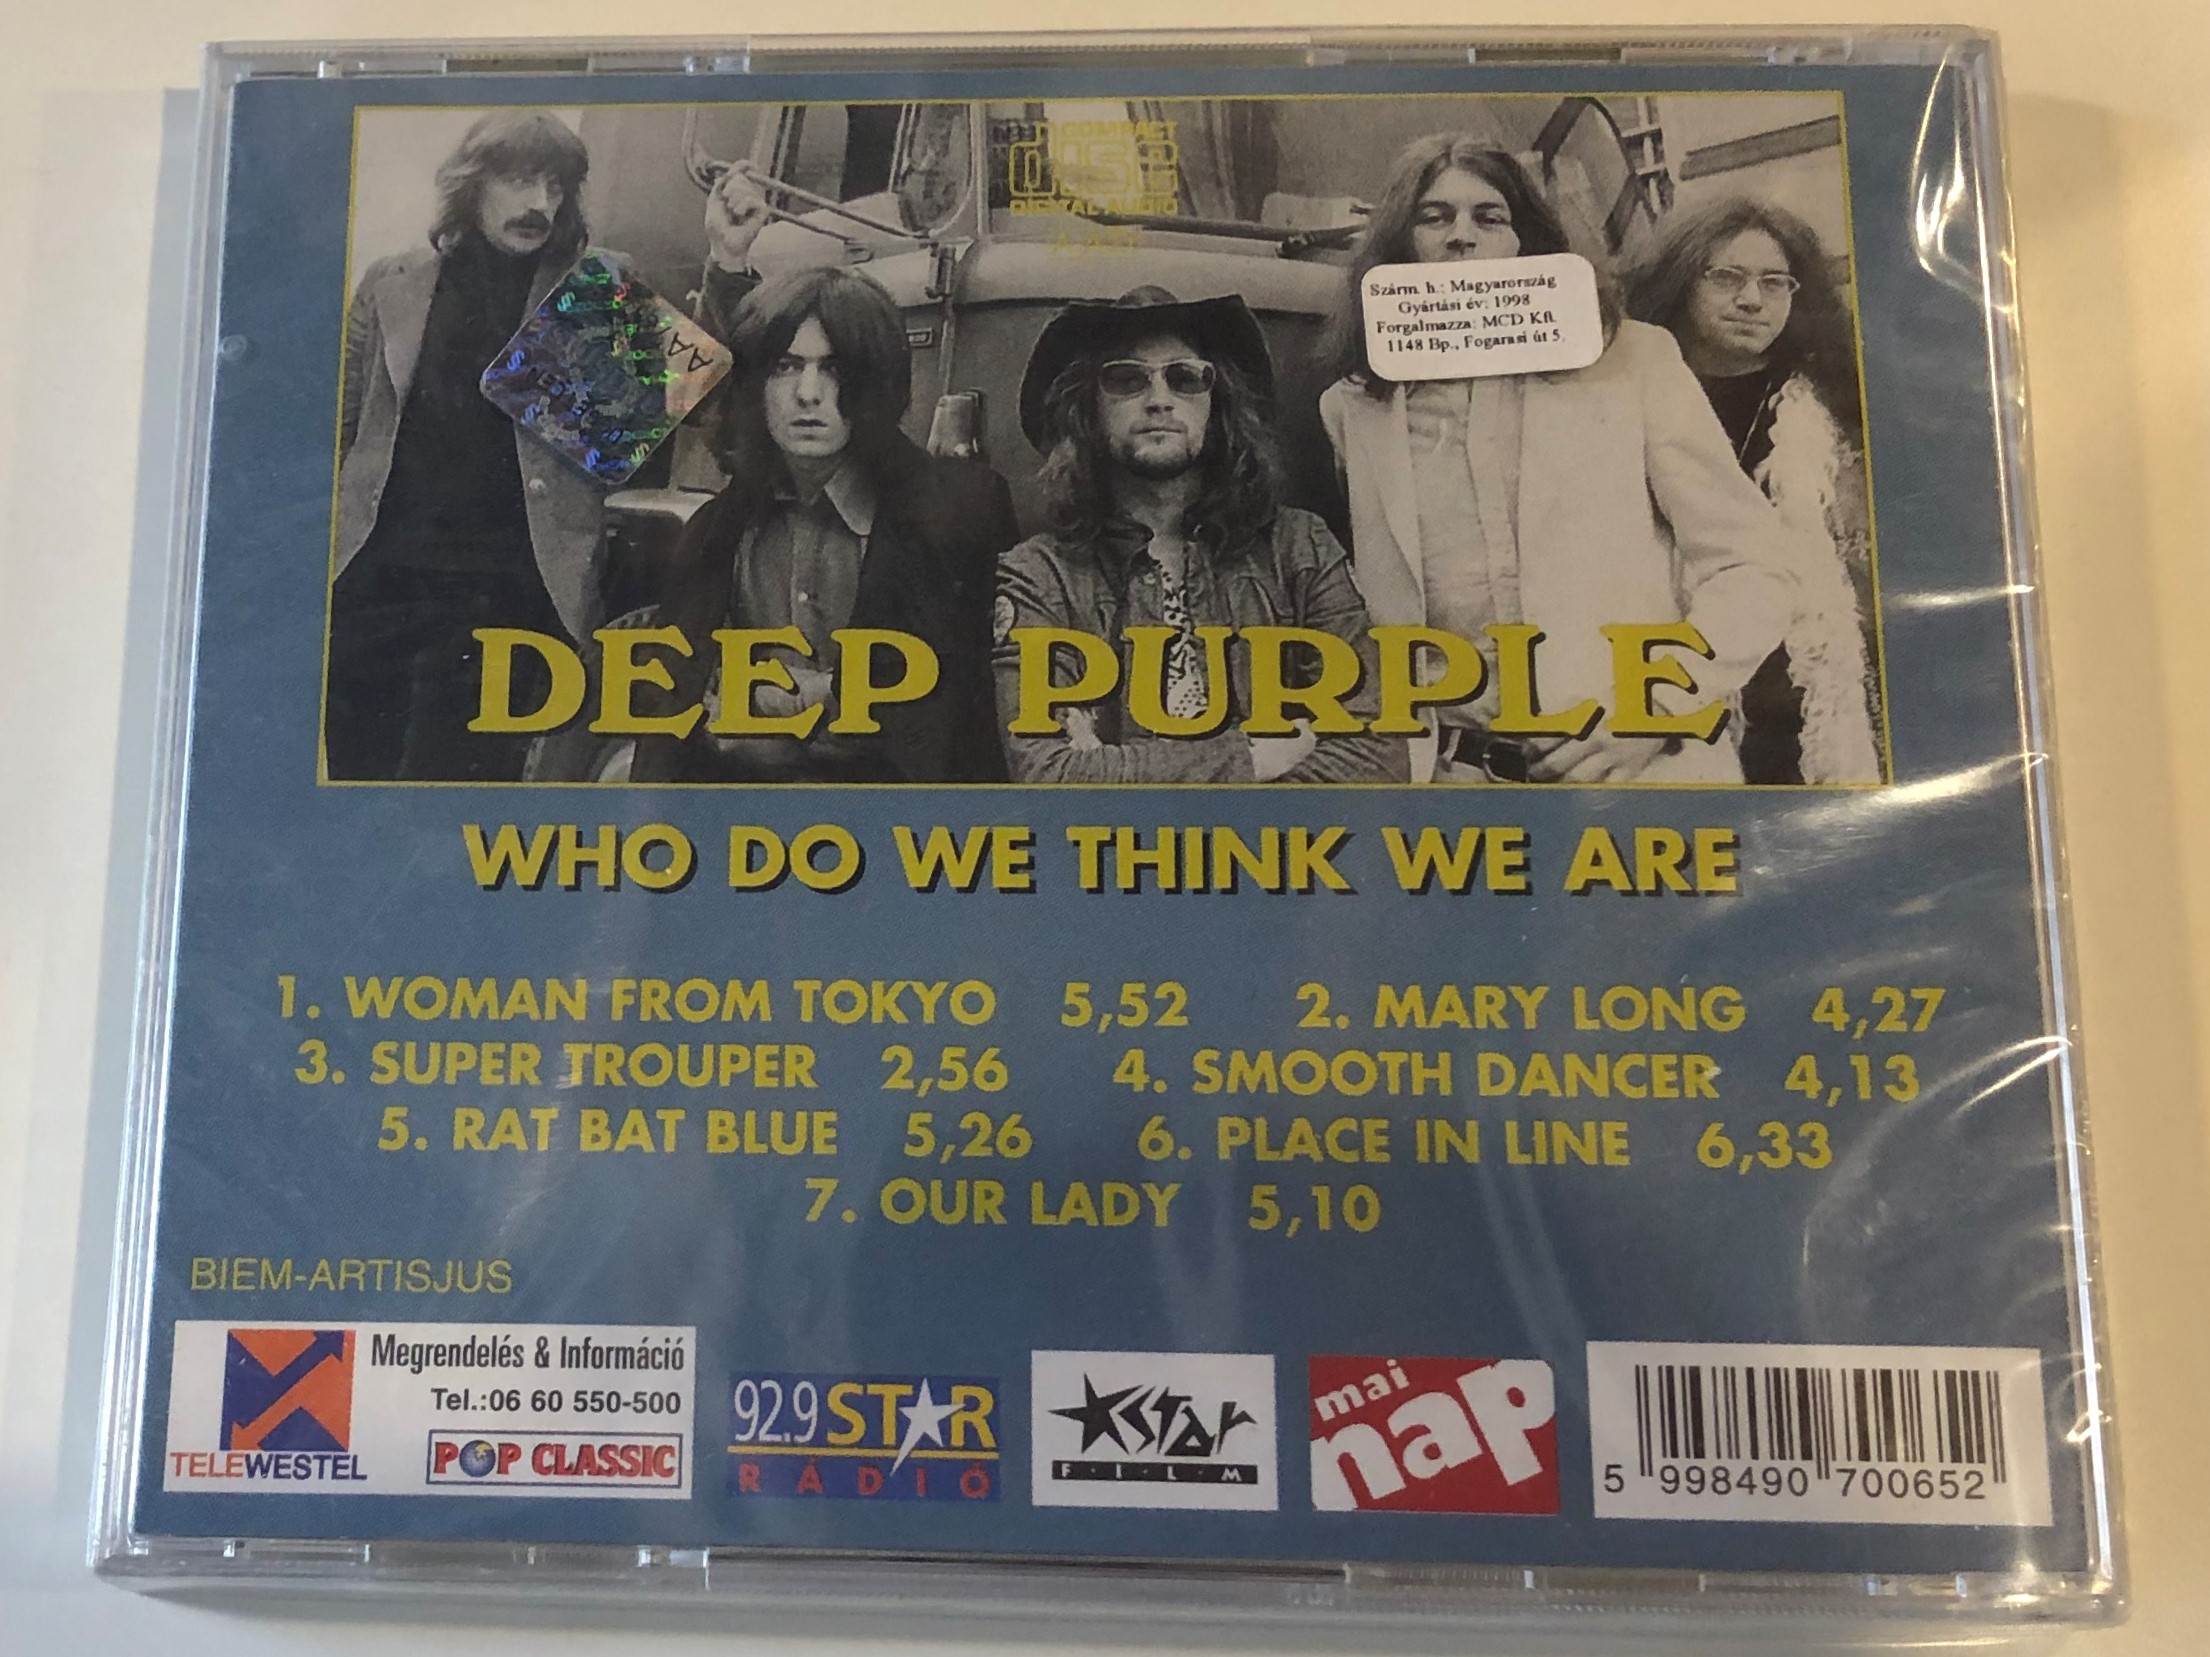 deep-purple-who-do-we-think-we-are-pop-classic-audio-cd-5998490700652-2-.jpg